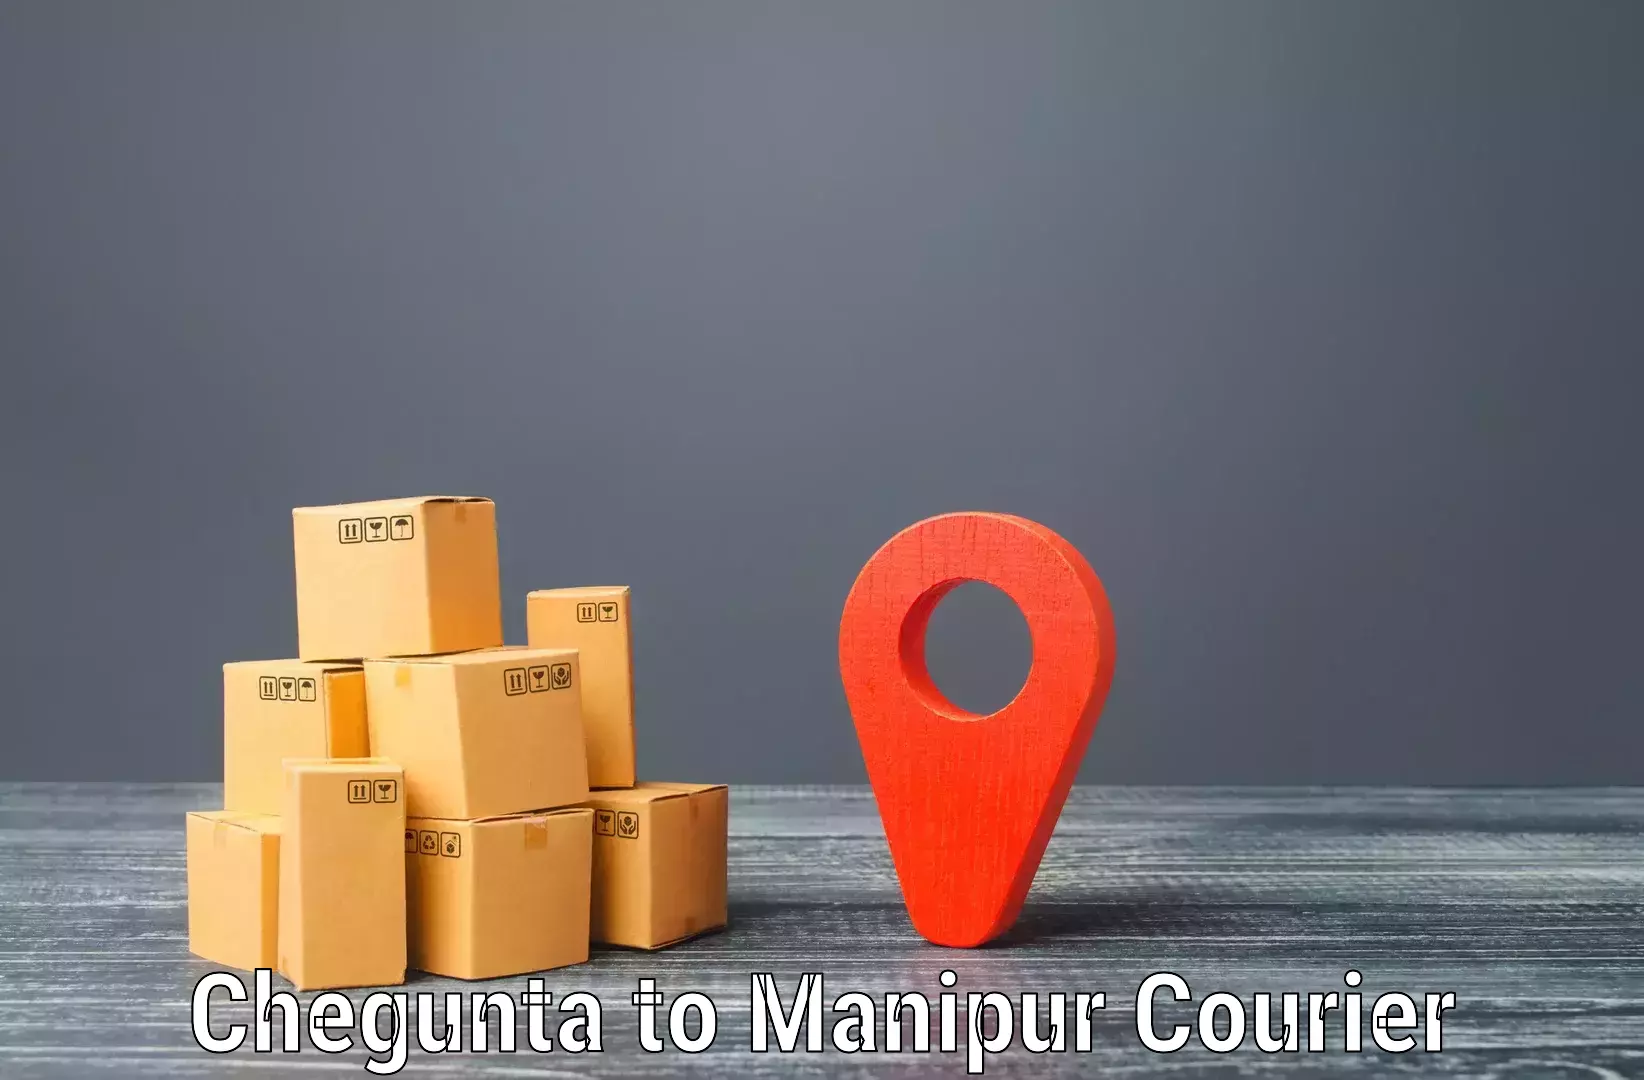 Logistics service provider Chegunta to Kanti